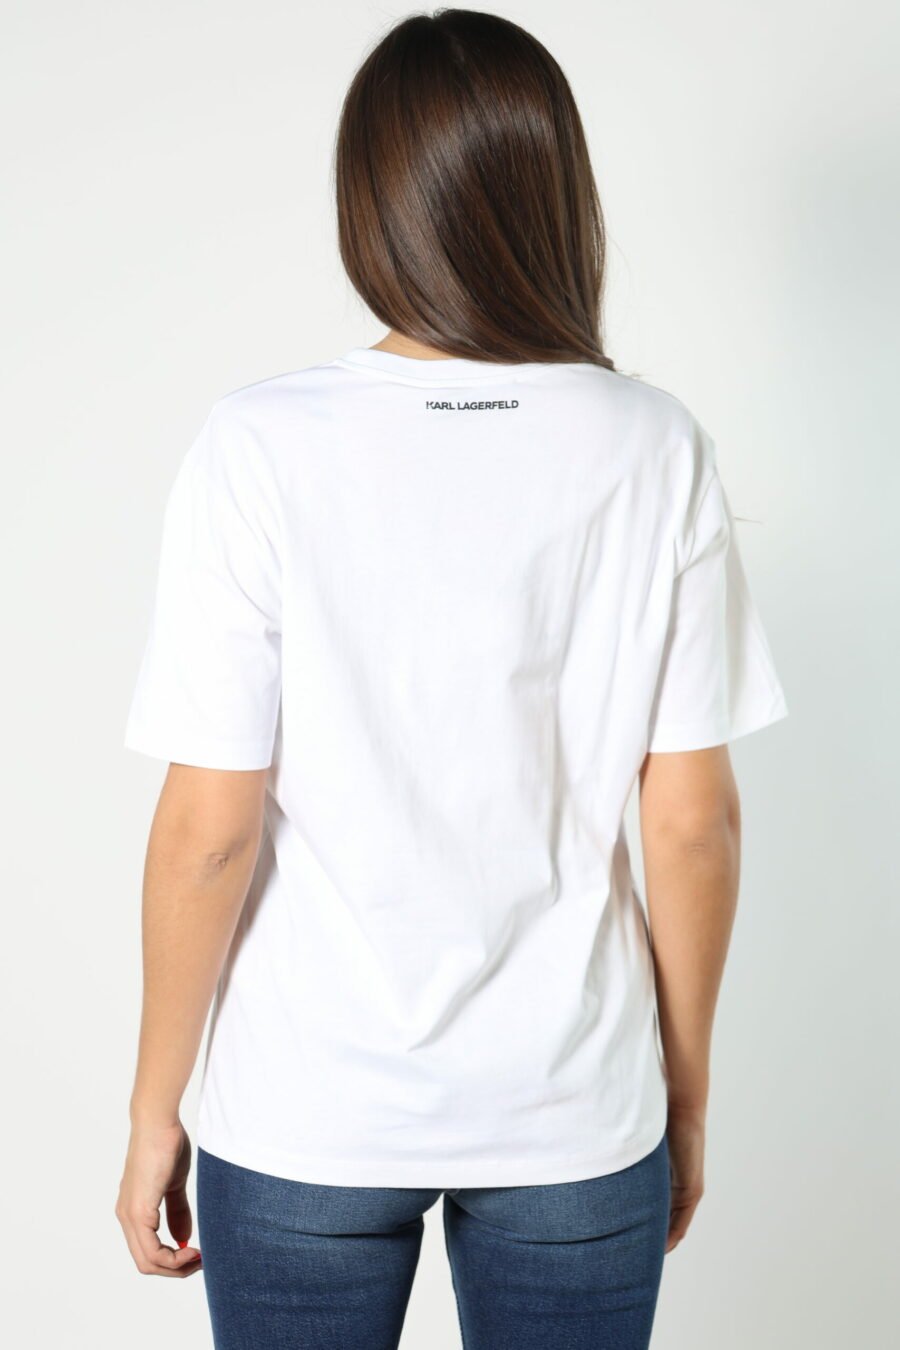 Camiseta blanca con logo negro "cara" - 8052865435499 386 scaled